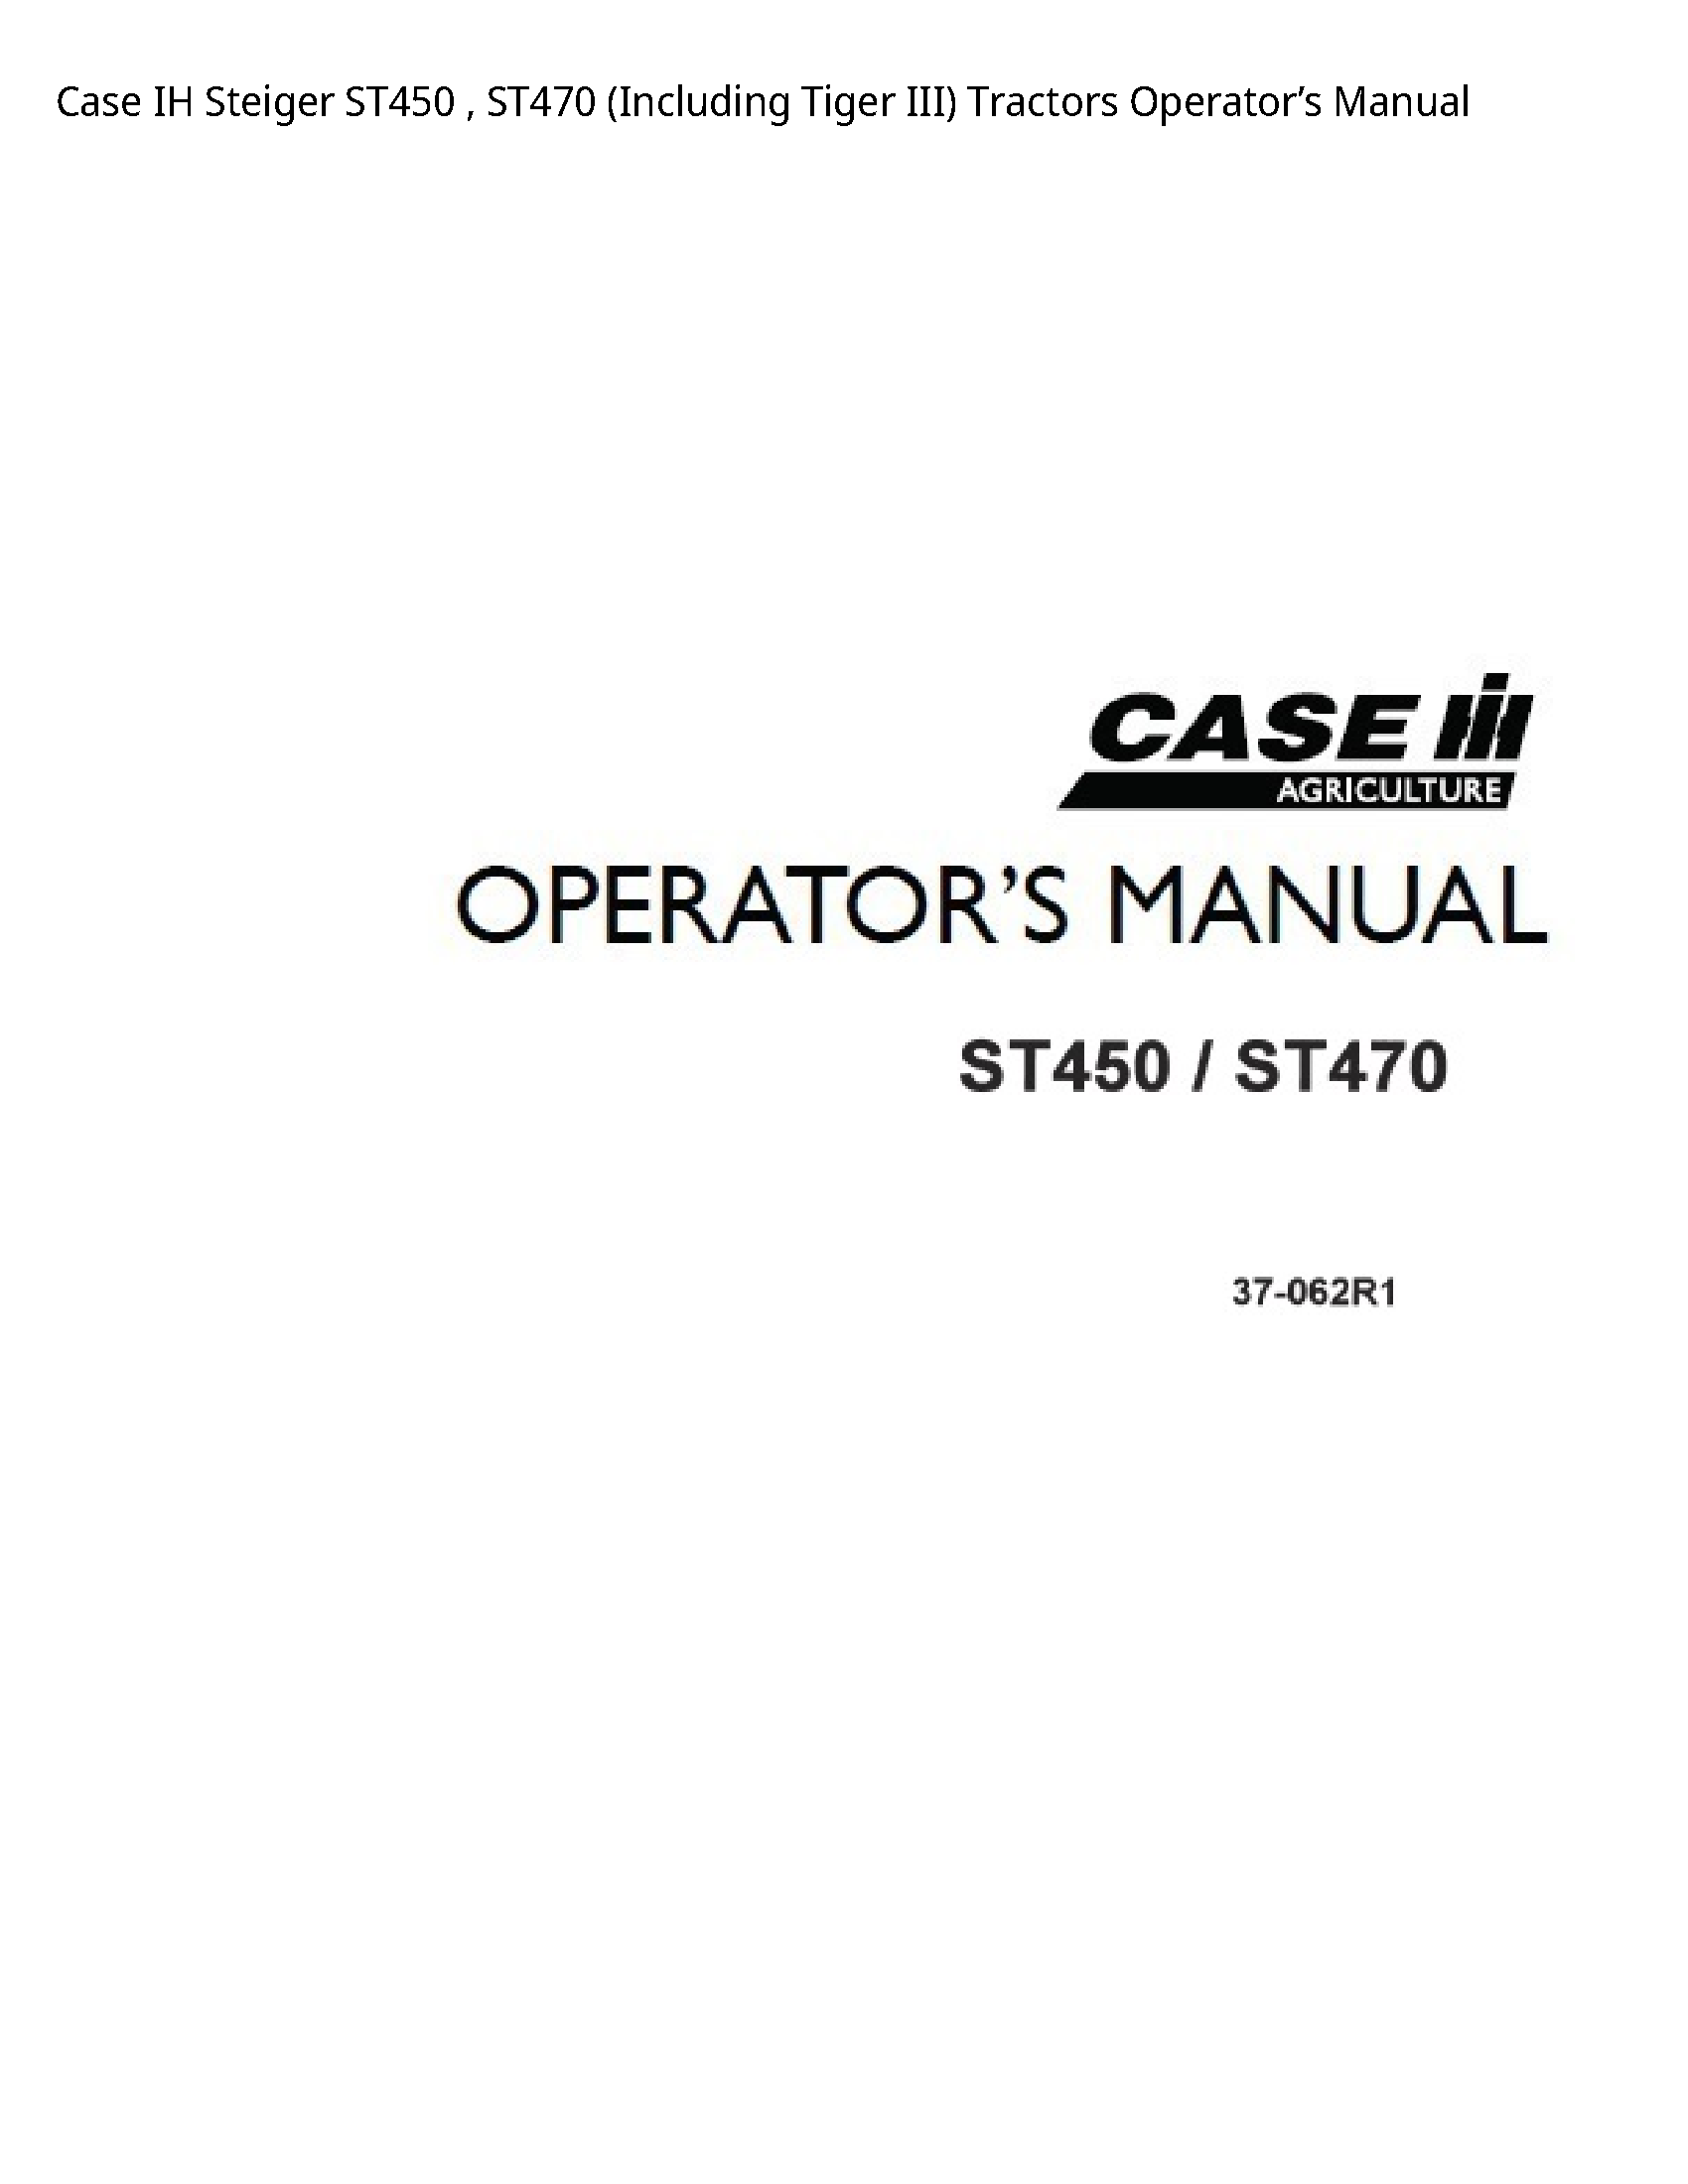 Case/Case IH ST450 IH Steiger (Including Tiger III) Tractors Operator’s manual